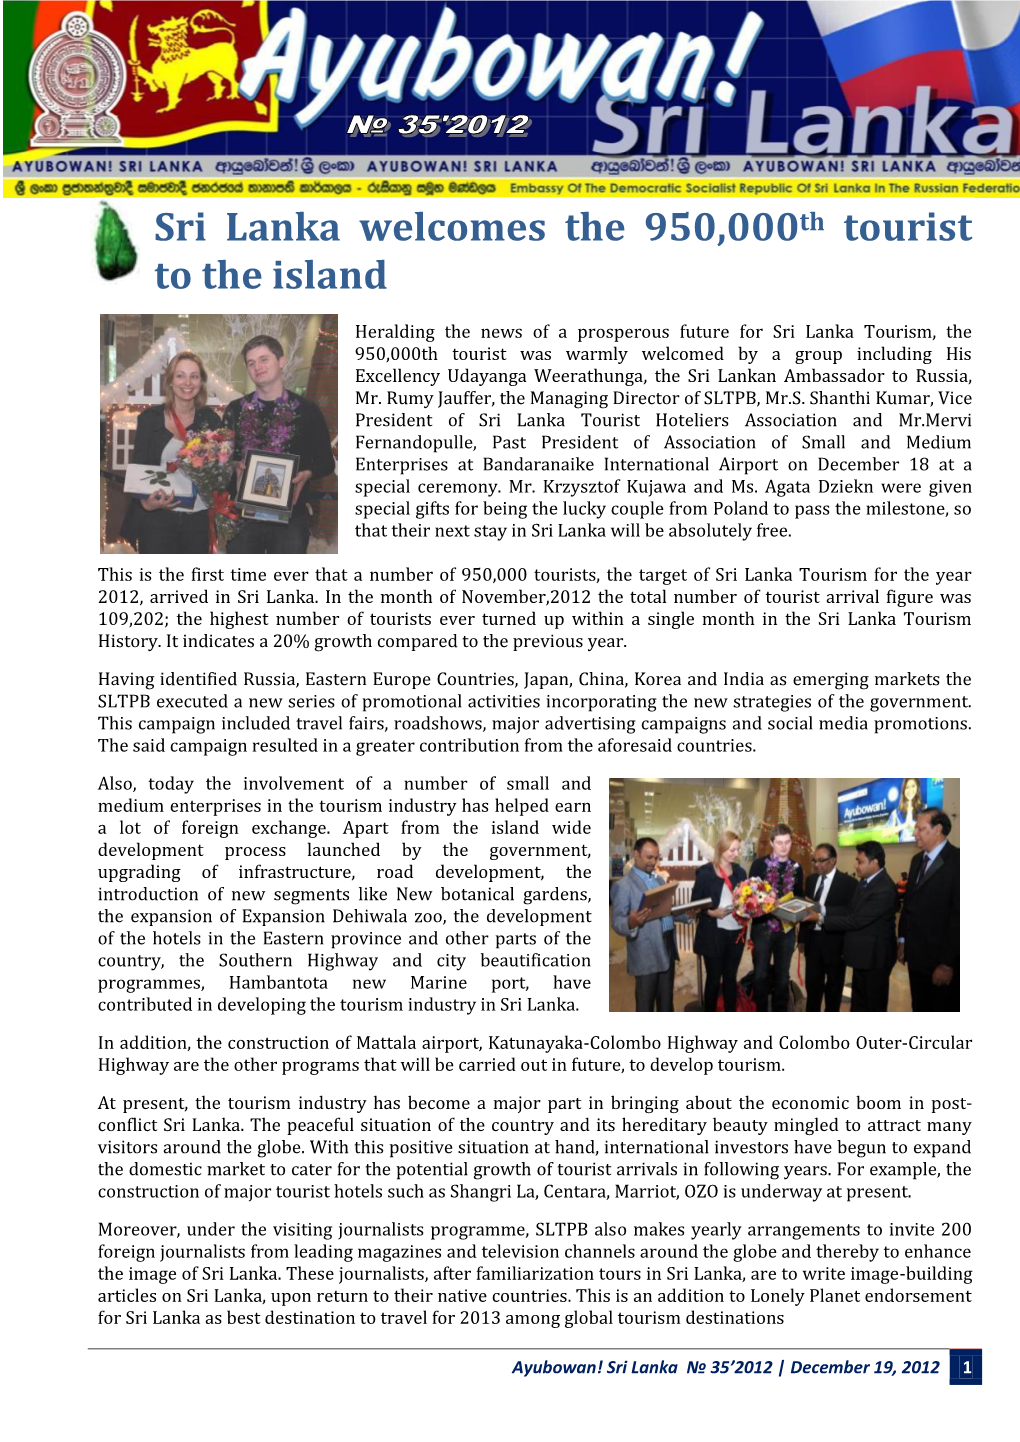 Sri Lanka Welcomes the 950,000Th Tourist to the Island